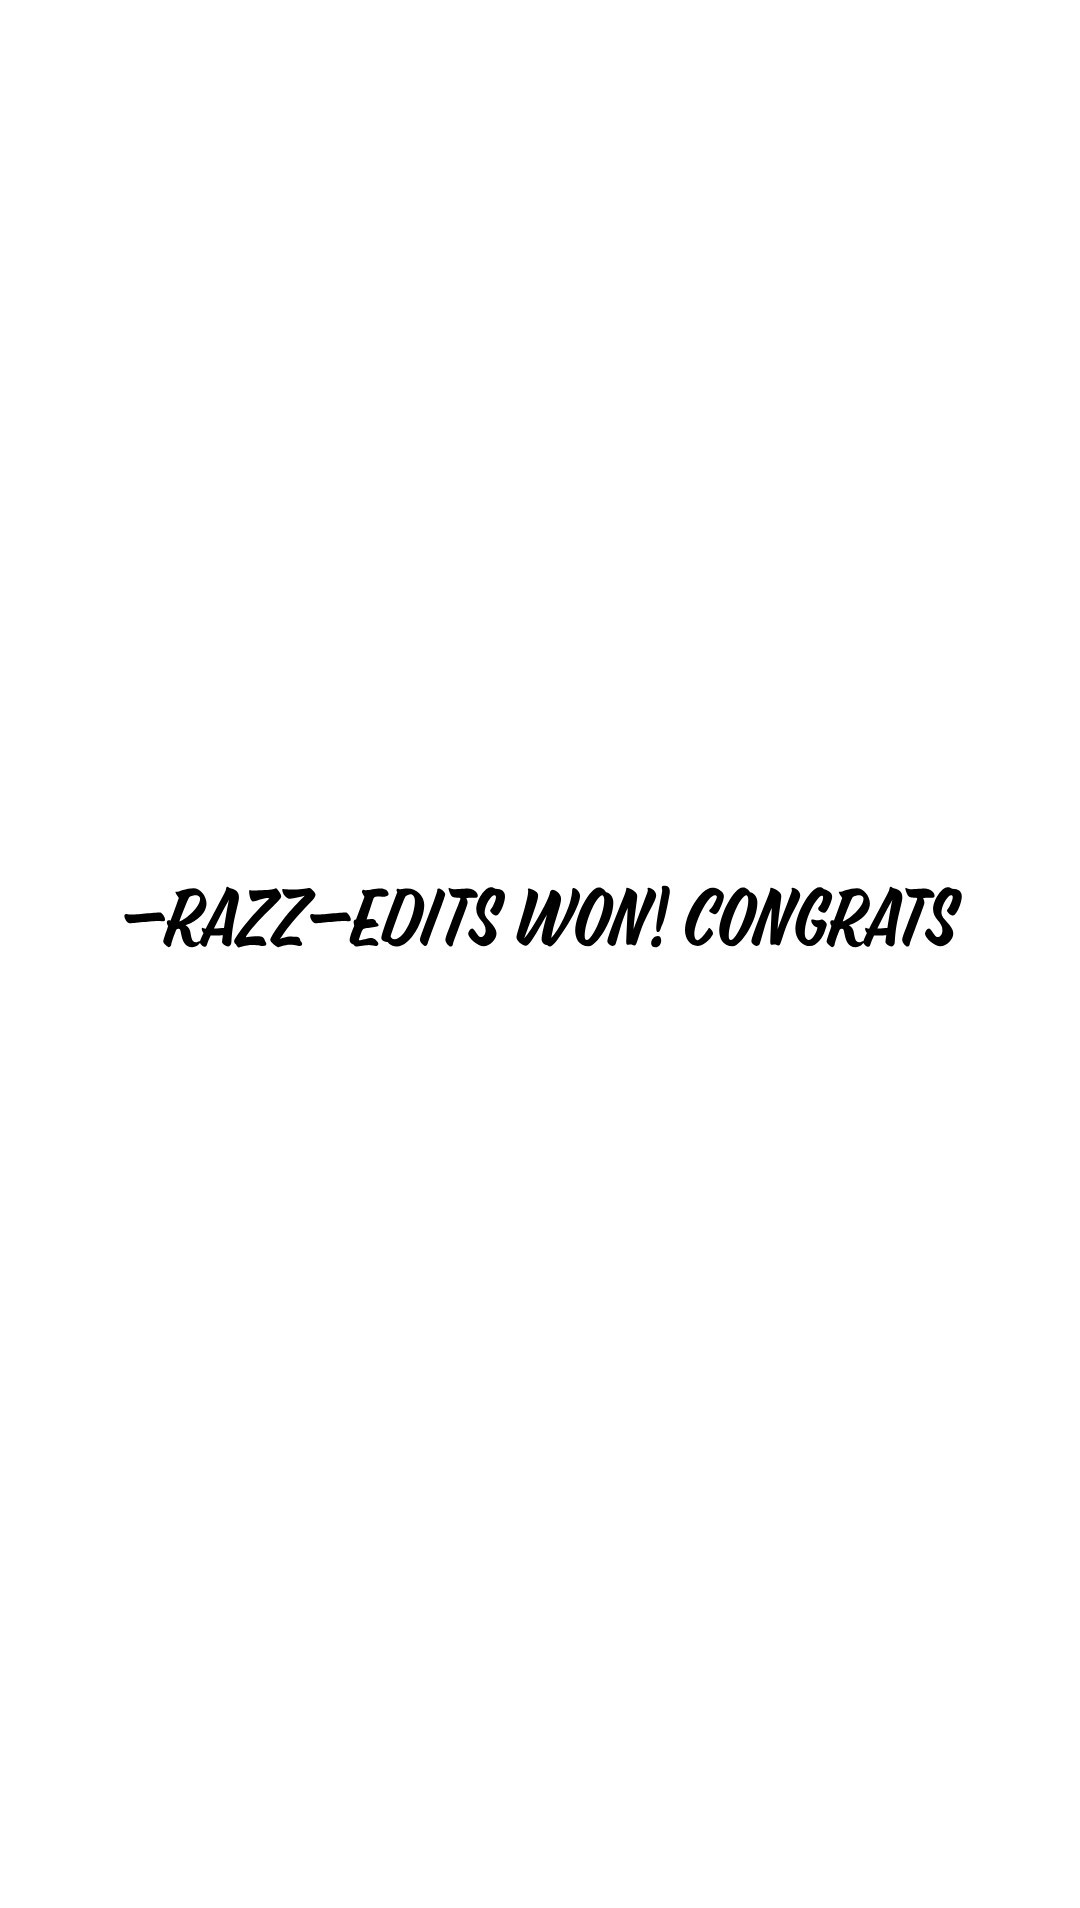 -razz-edits won! Congrats 